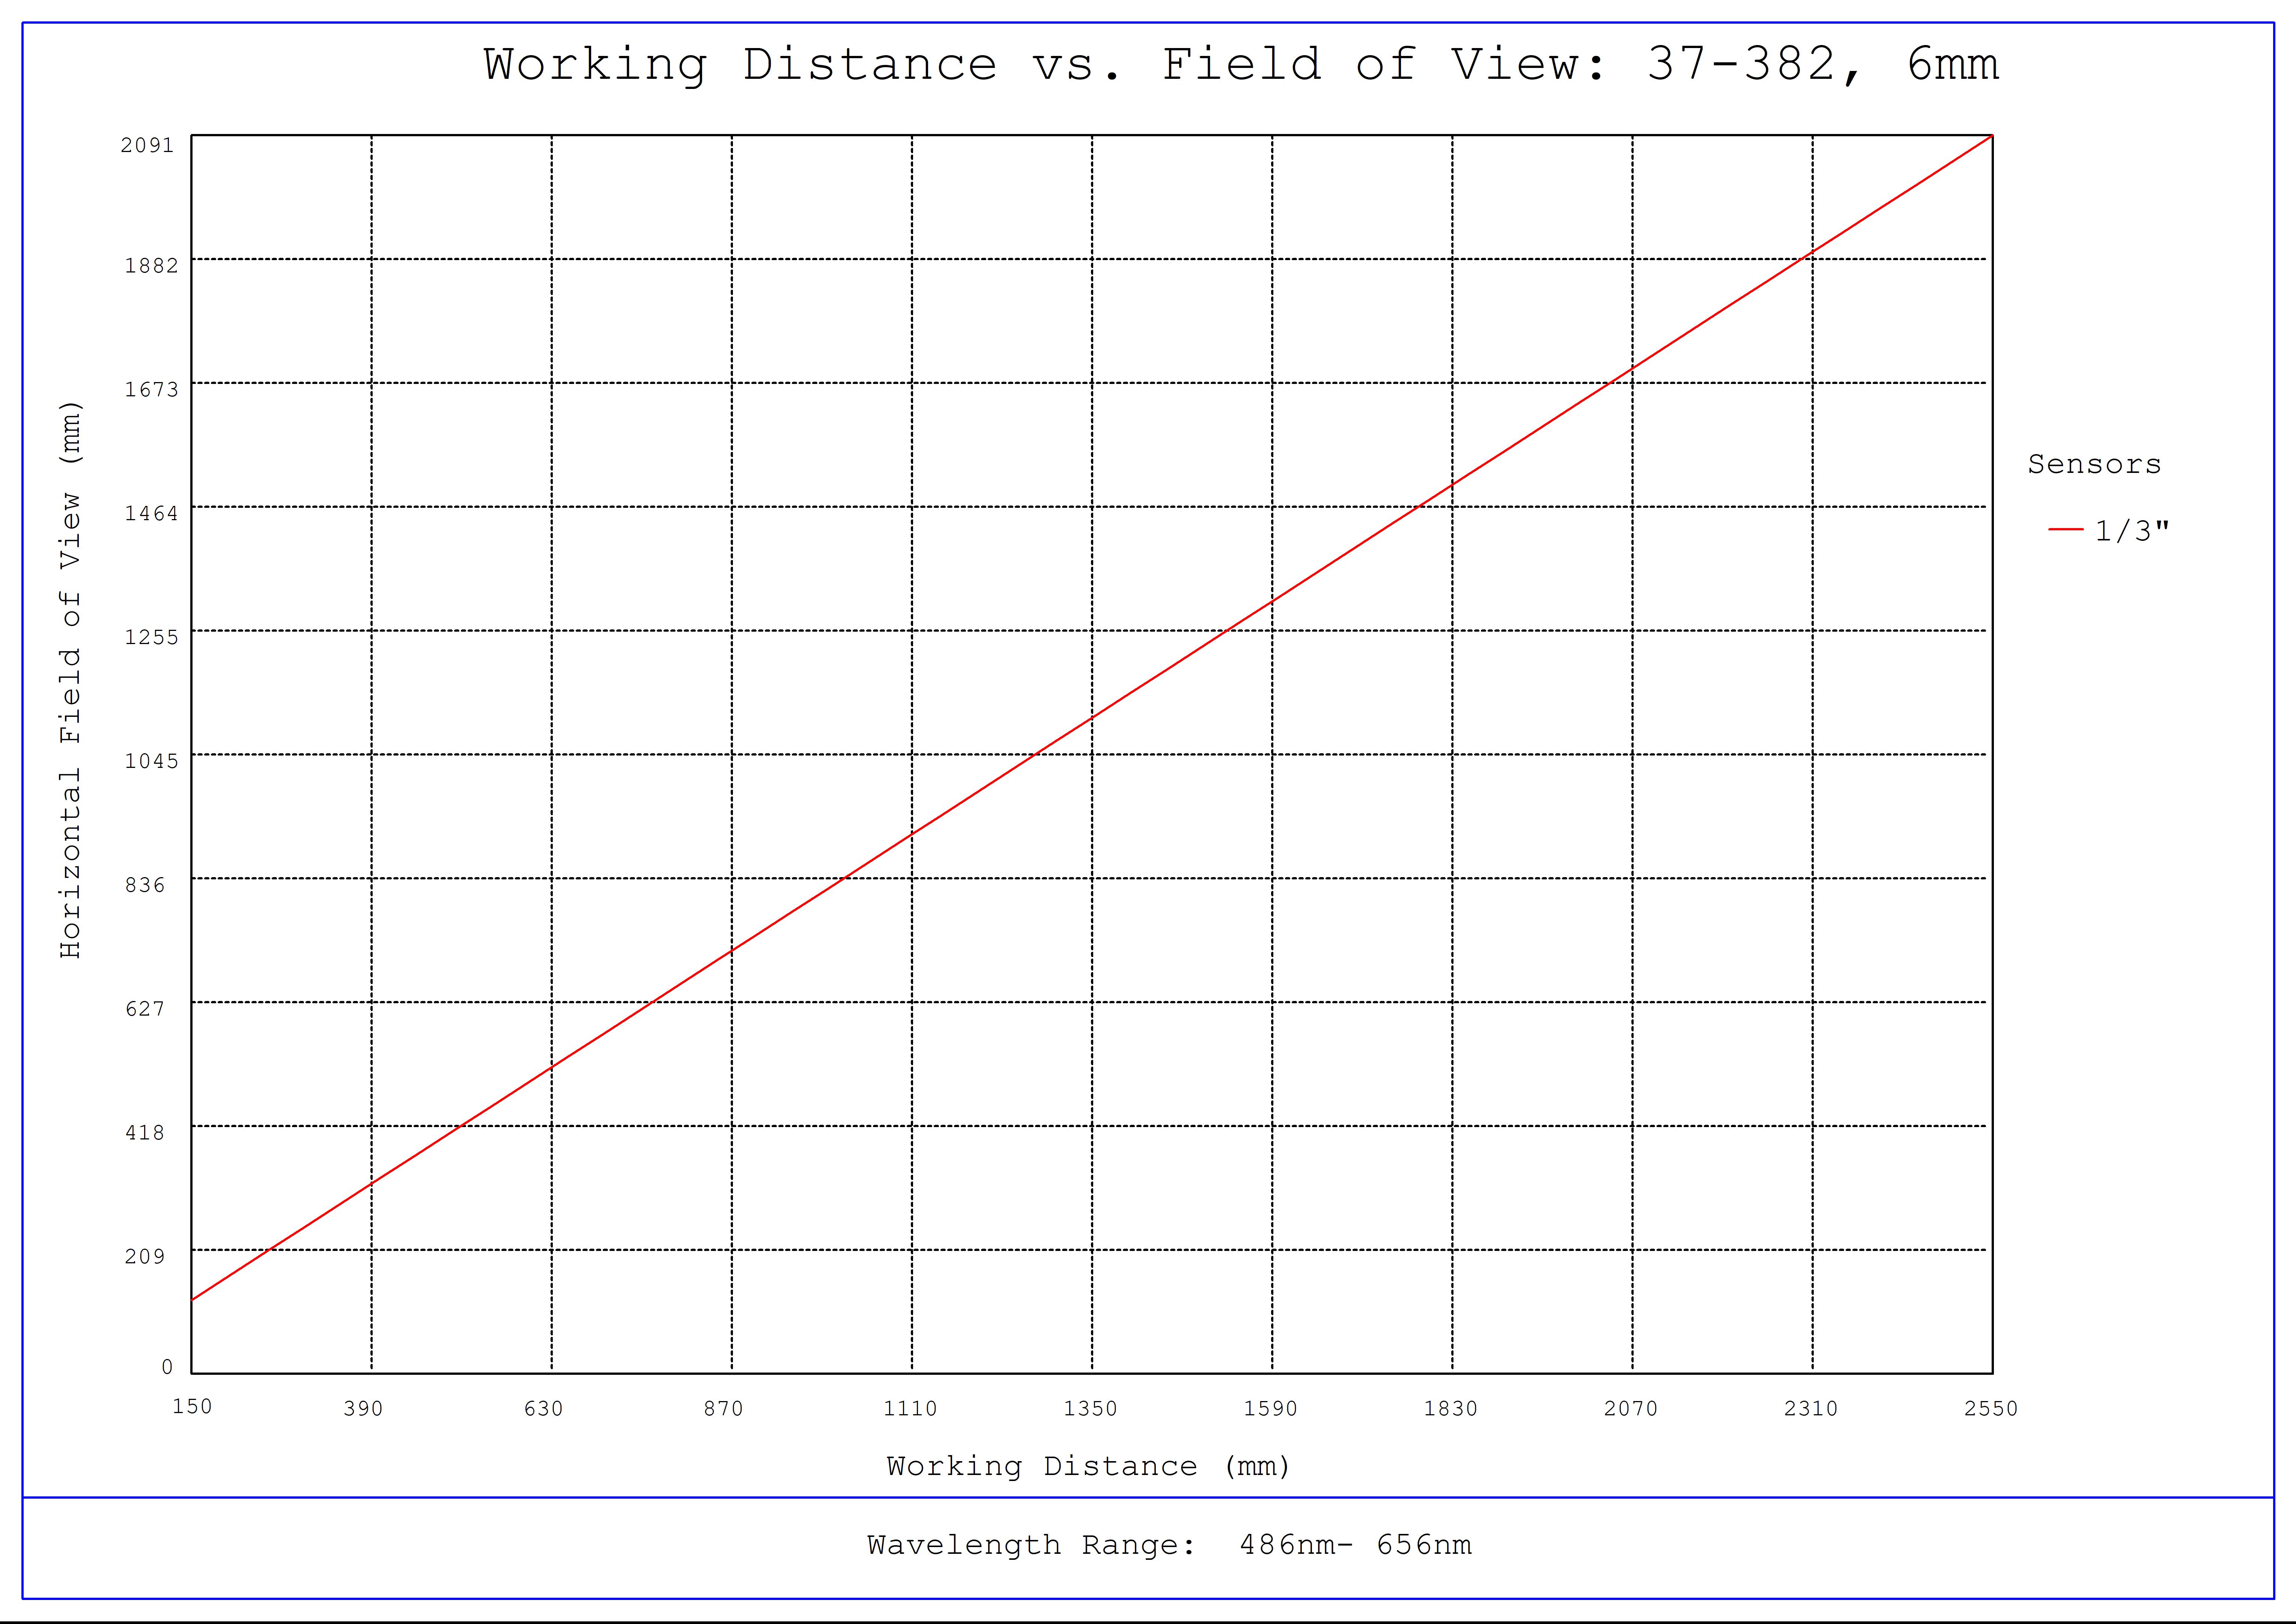 #37-382, 6mm FL f/2.5, Rugged Blue Series M12 Lens, Working Distance versus Field of View Plot